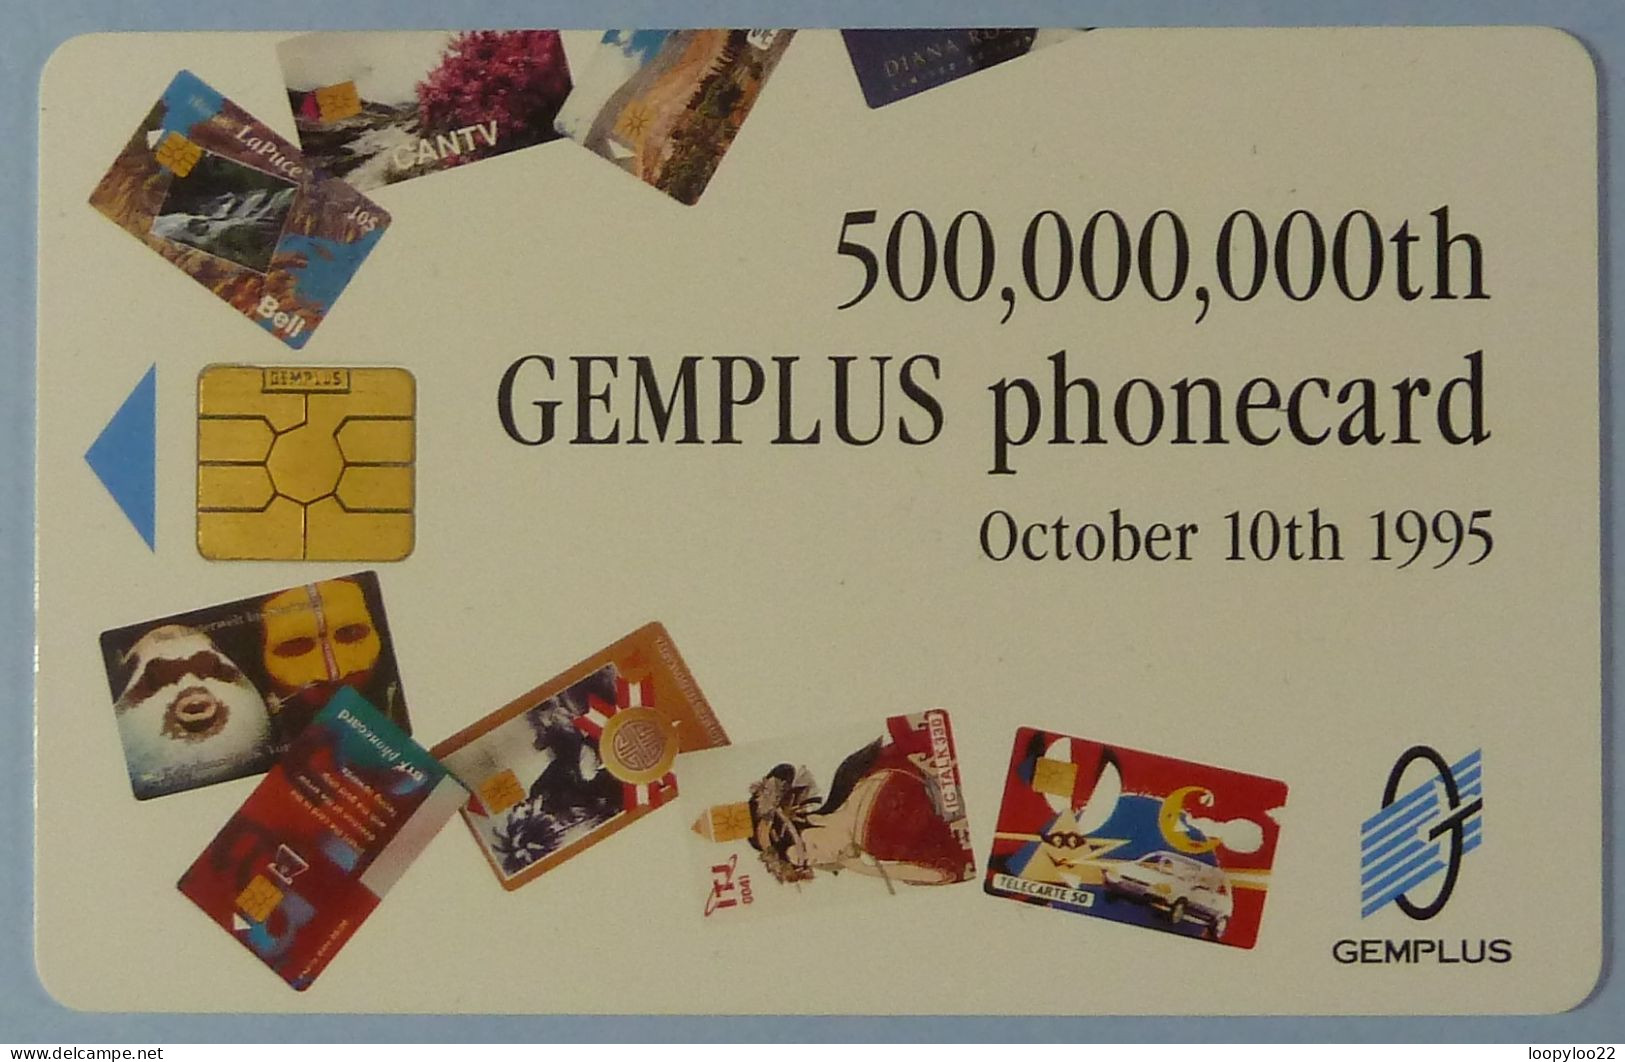 UK - Gemplus Demo - Telecom 95 - 500,000,000th - Geneva - Emissioni Imprese